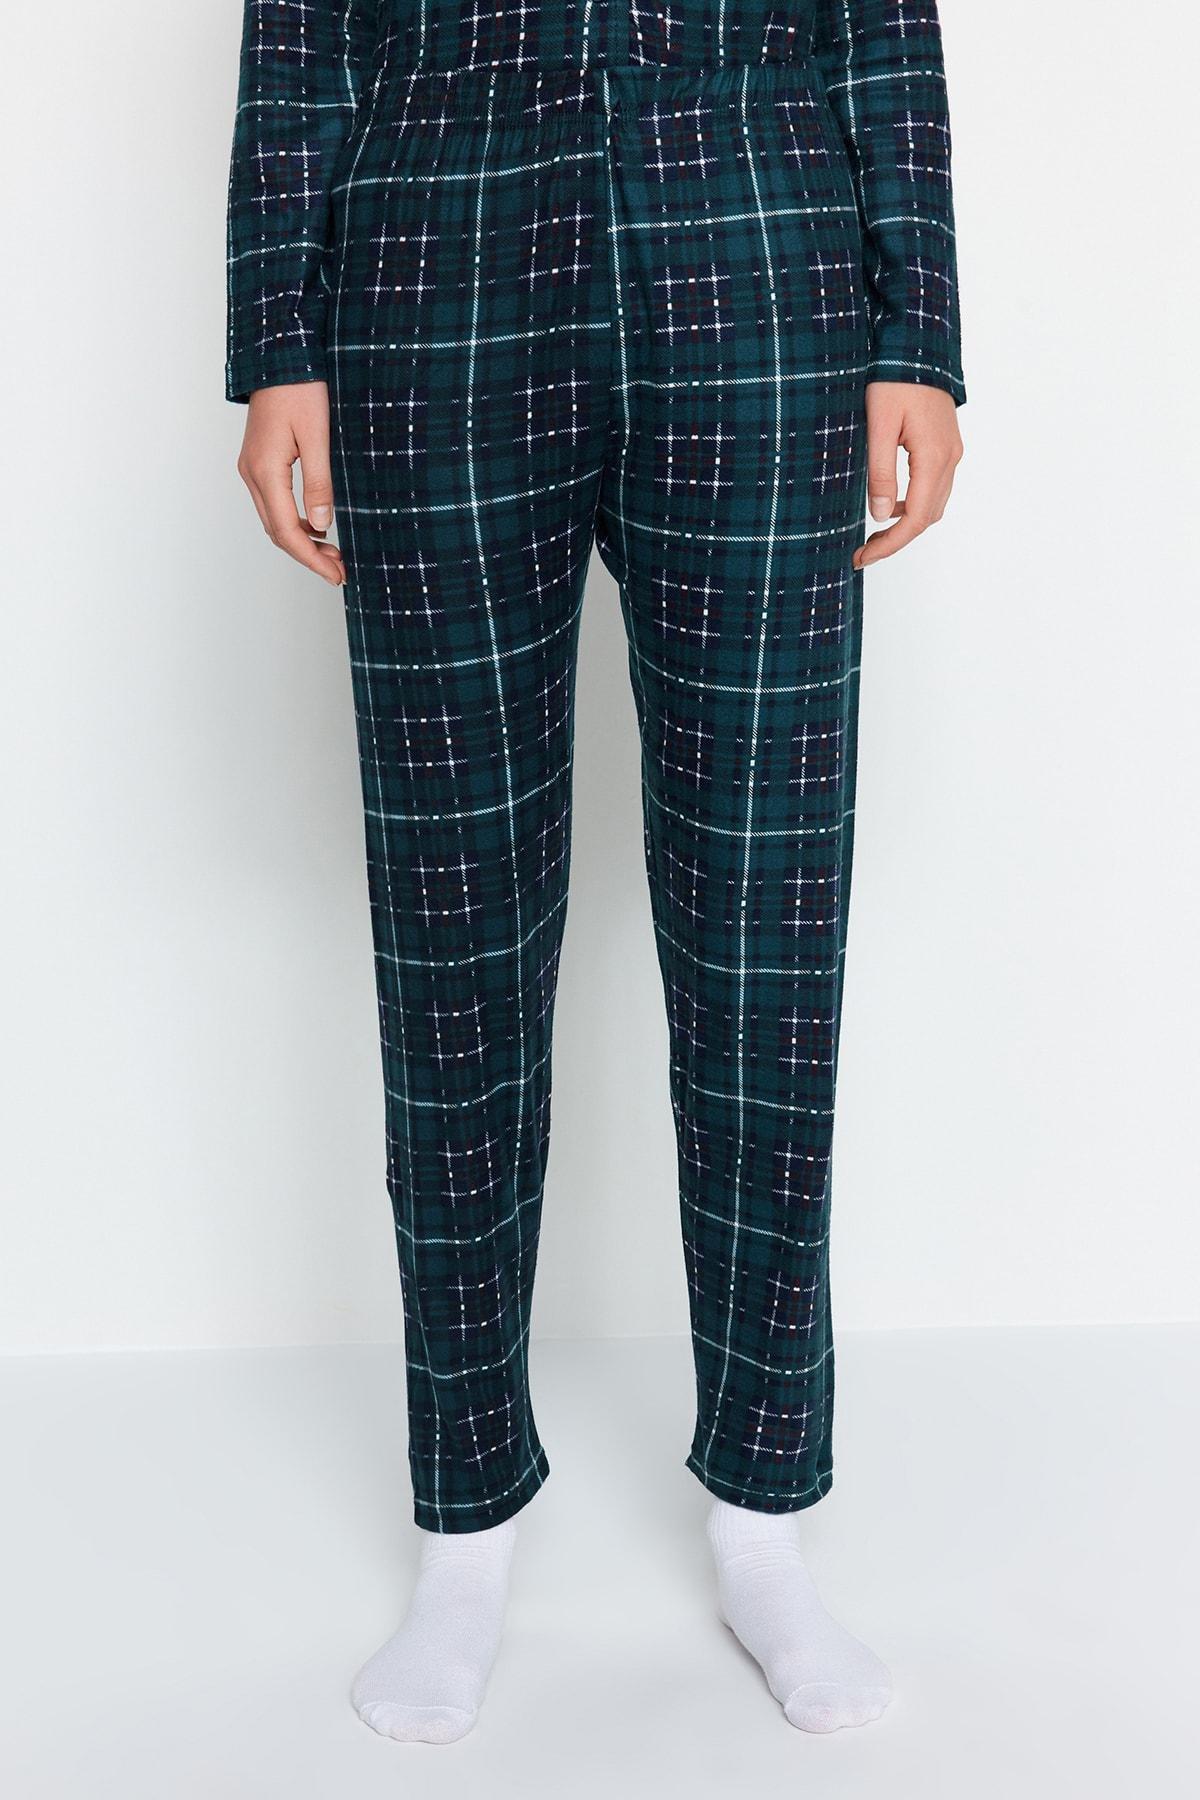 Trendyol - Green Checkered Knitted Pyjamas Set.<br>